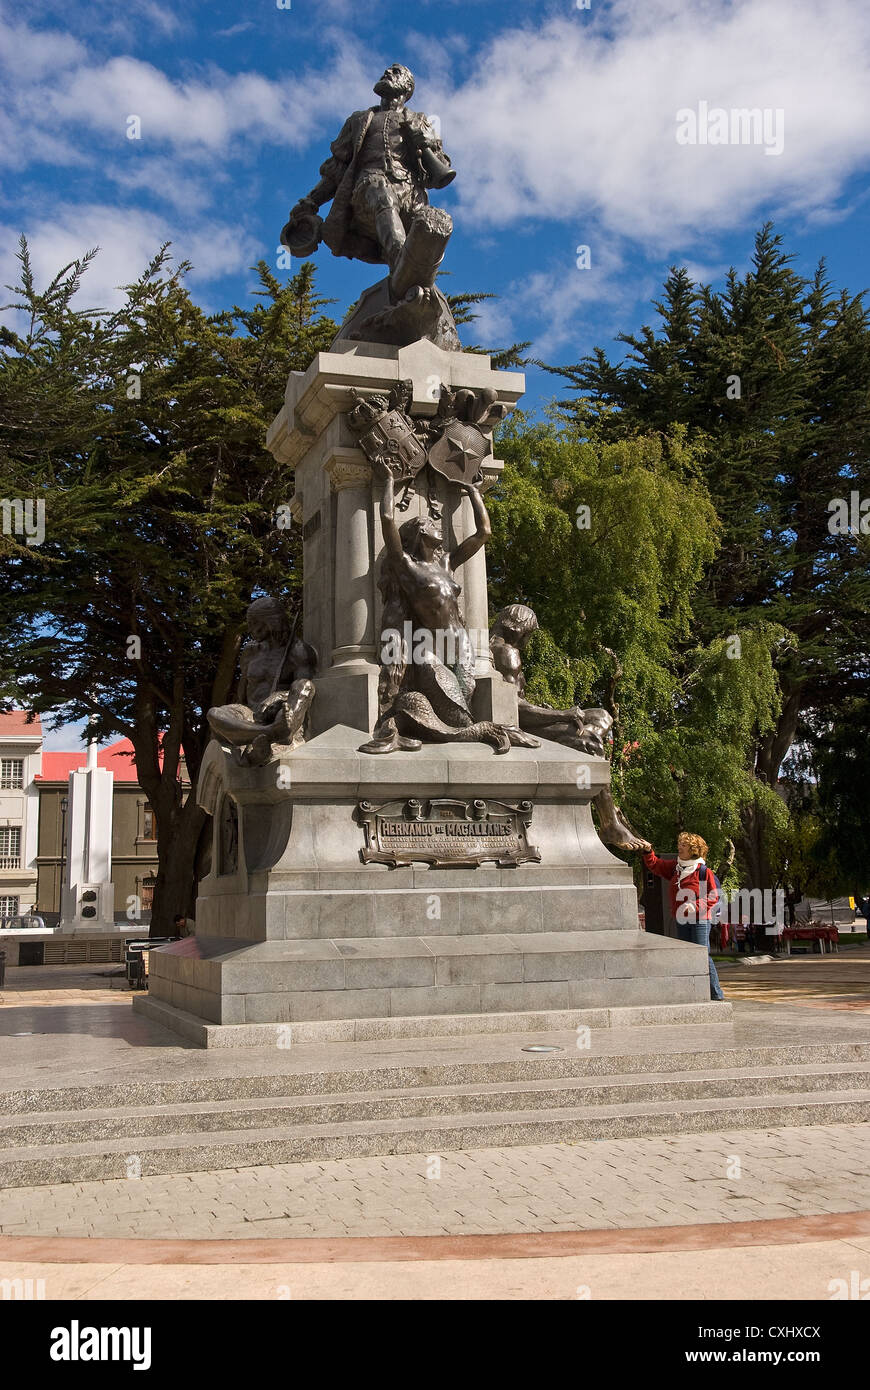 Elk198-4029v Chile, Patagonia, Punta Arenas, Plaza Munoz Gamero, statue of Magellan, model released Stock Photo